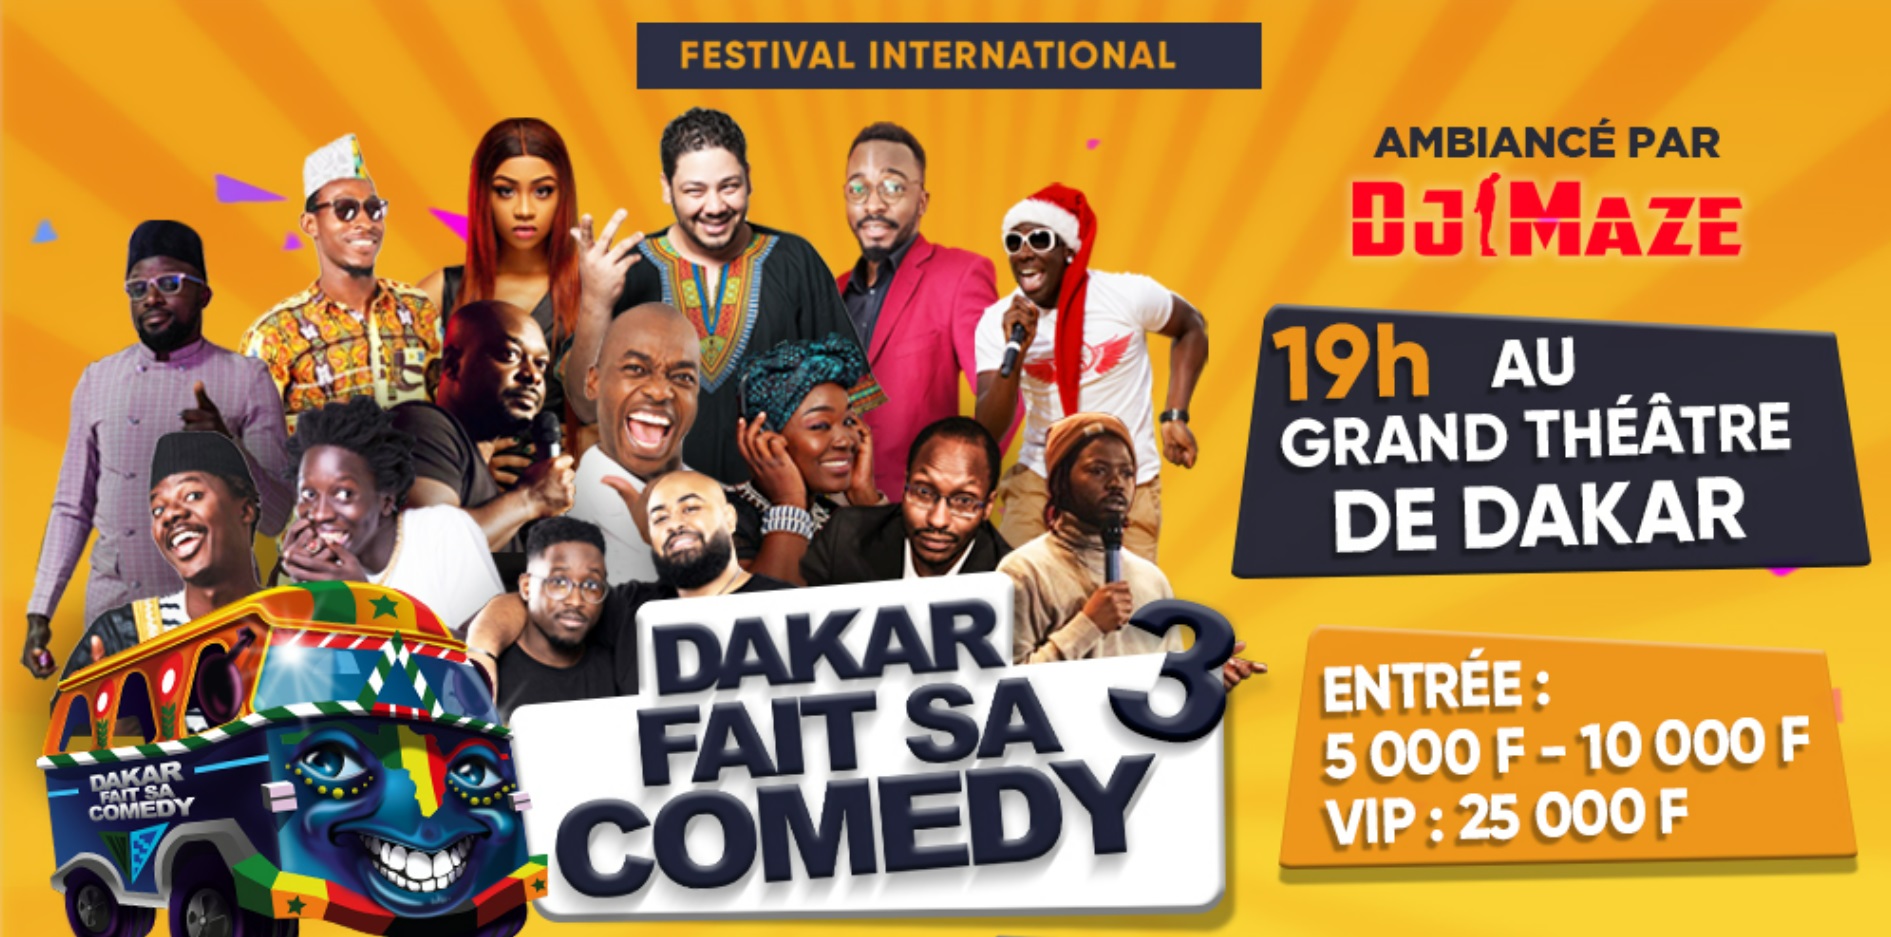 Festival international Dakar fait sa comedy le 14 mai 2022 à 19h au Grand théâtre